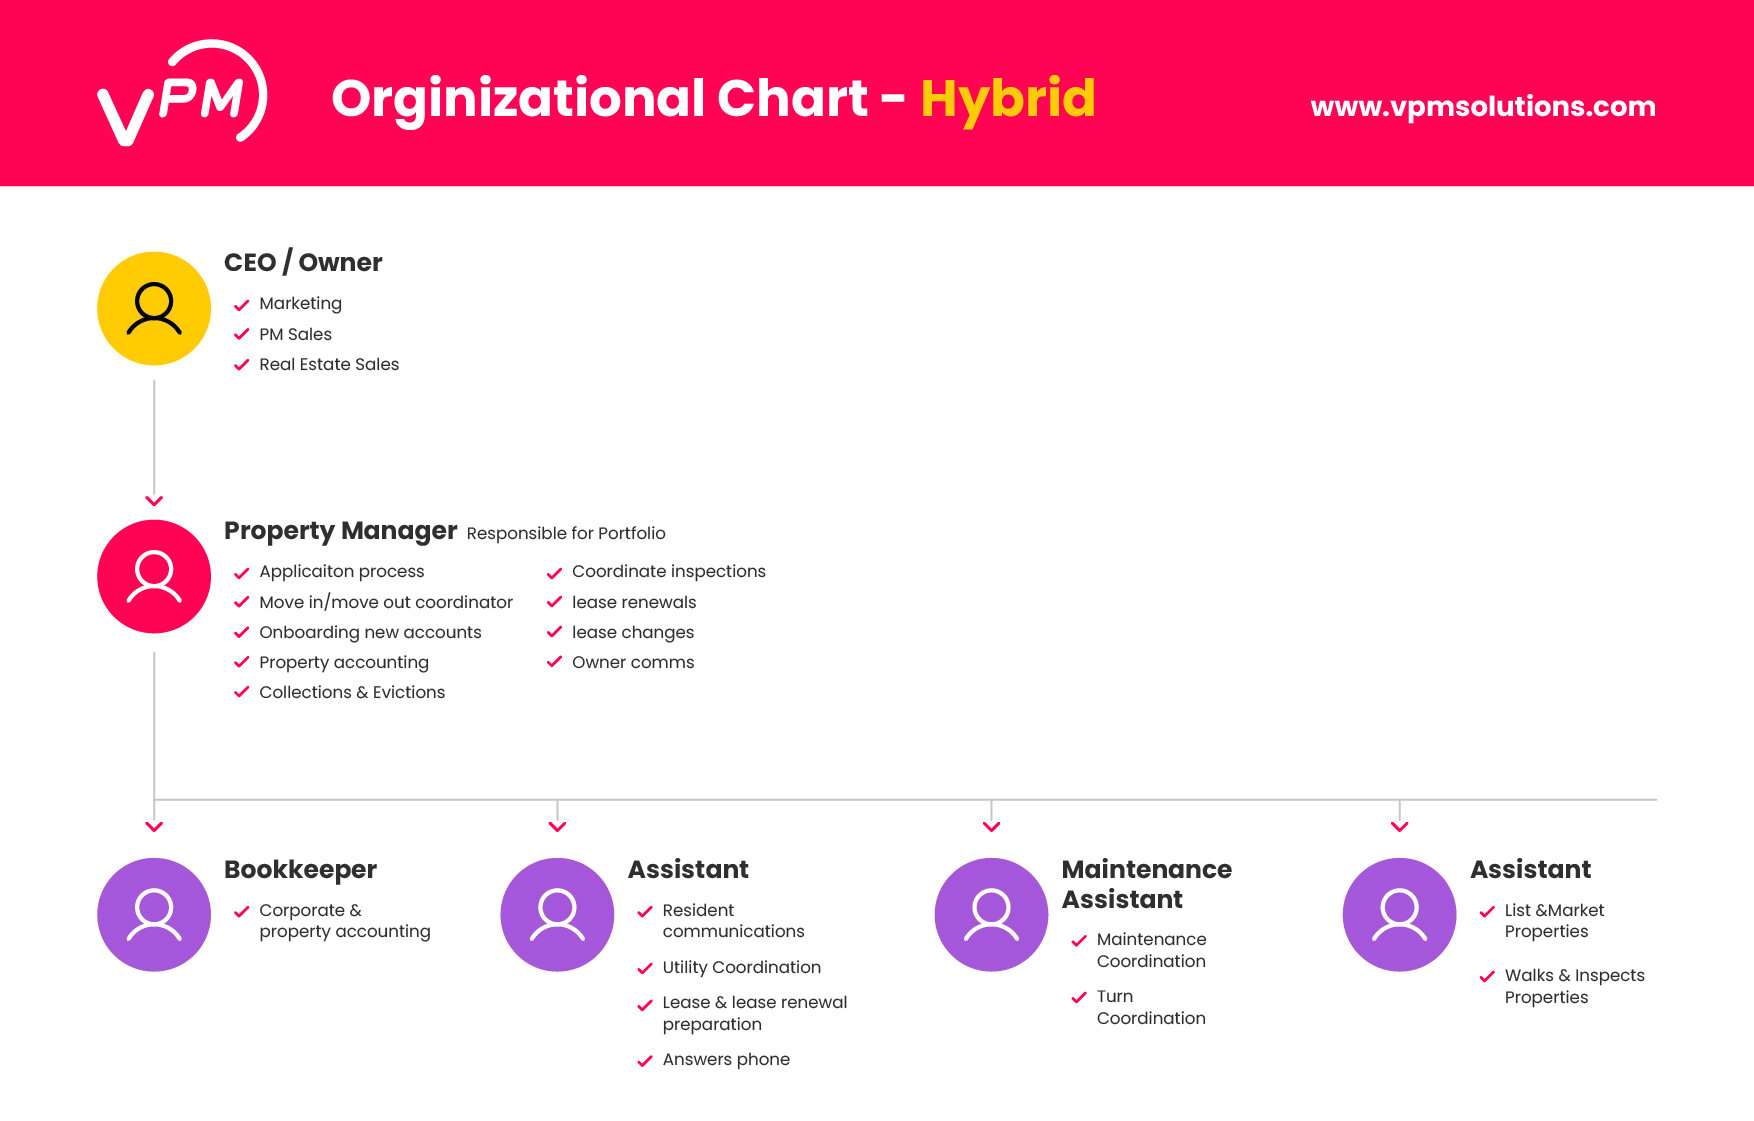 Orginizational Chart - Hybrid